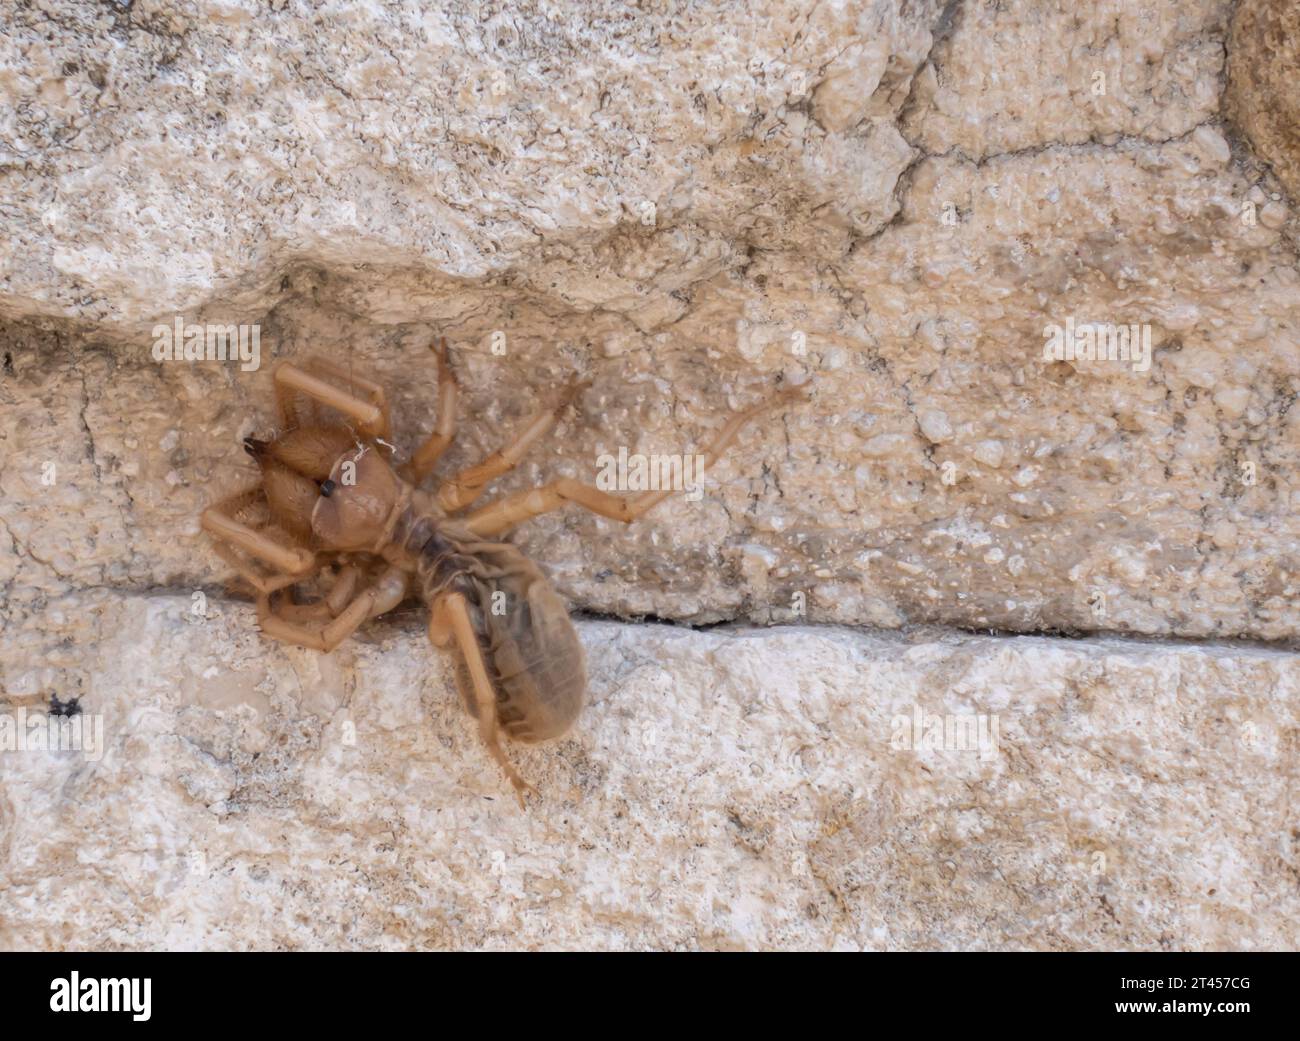 venomous spider in Hatay Turkey Stock Photo